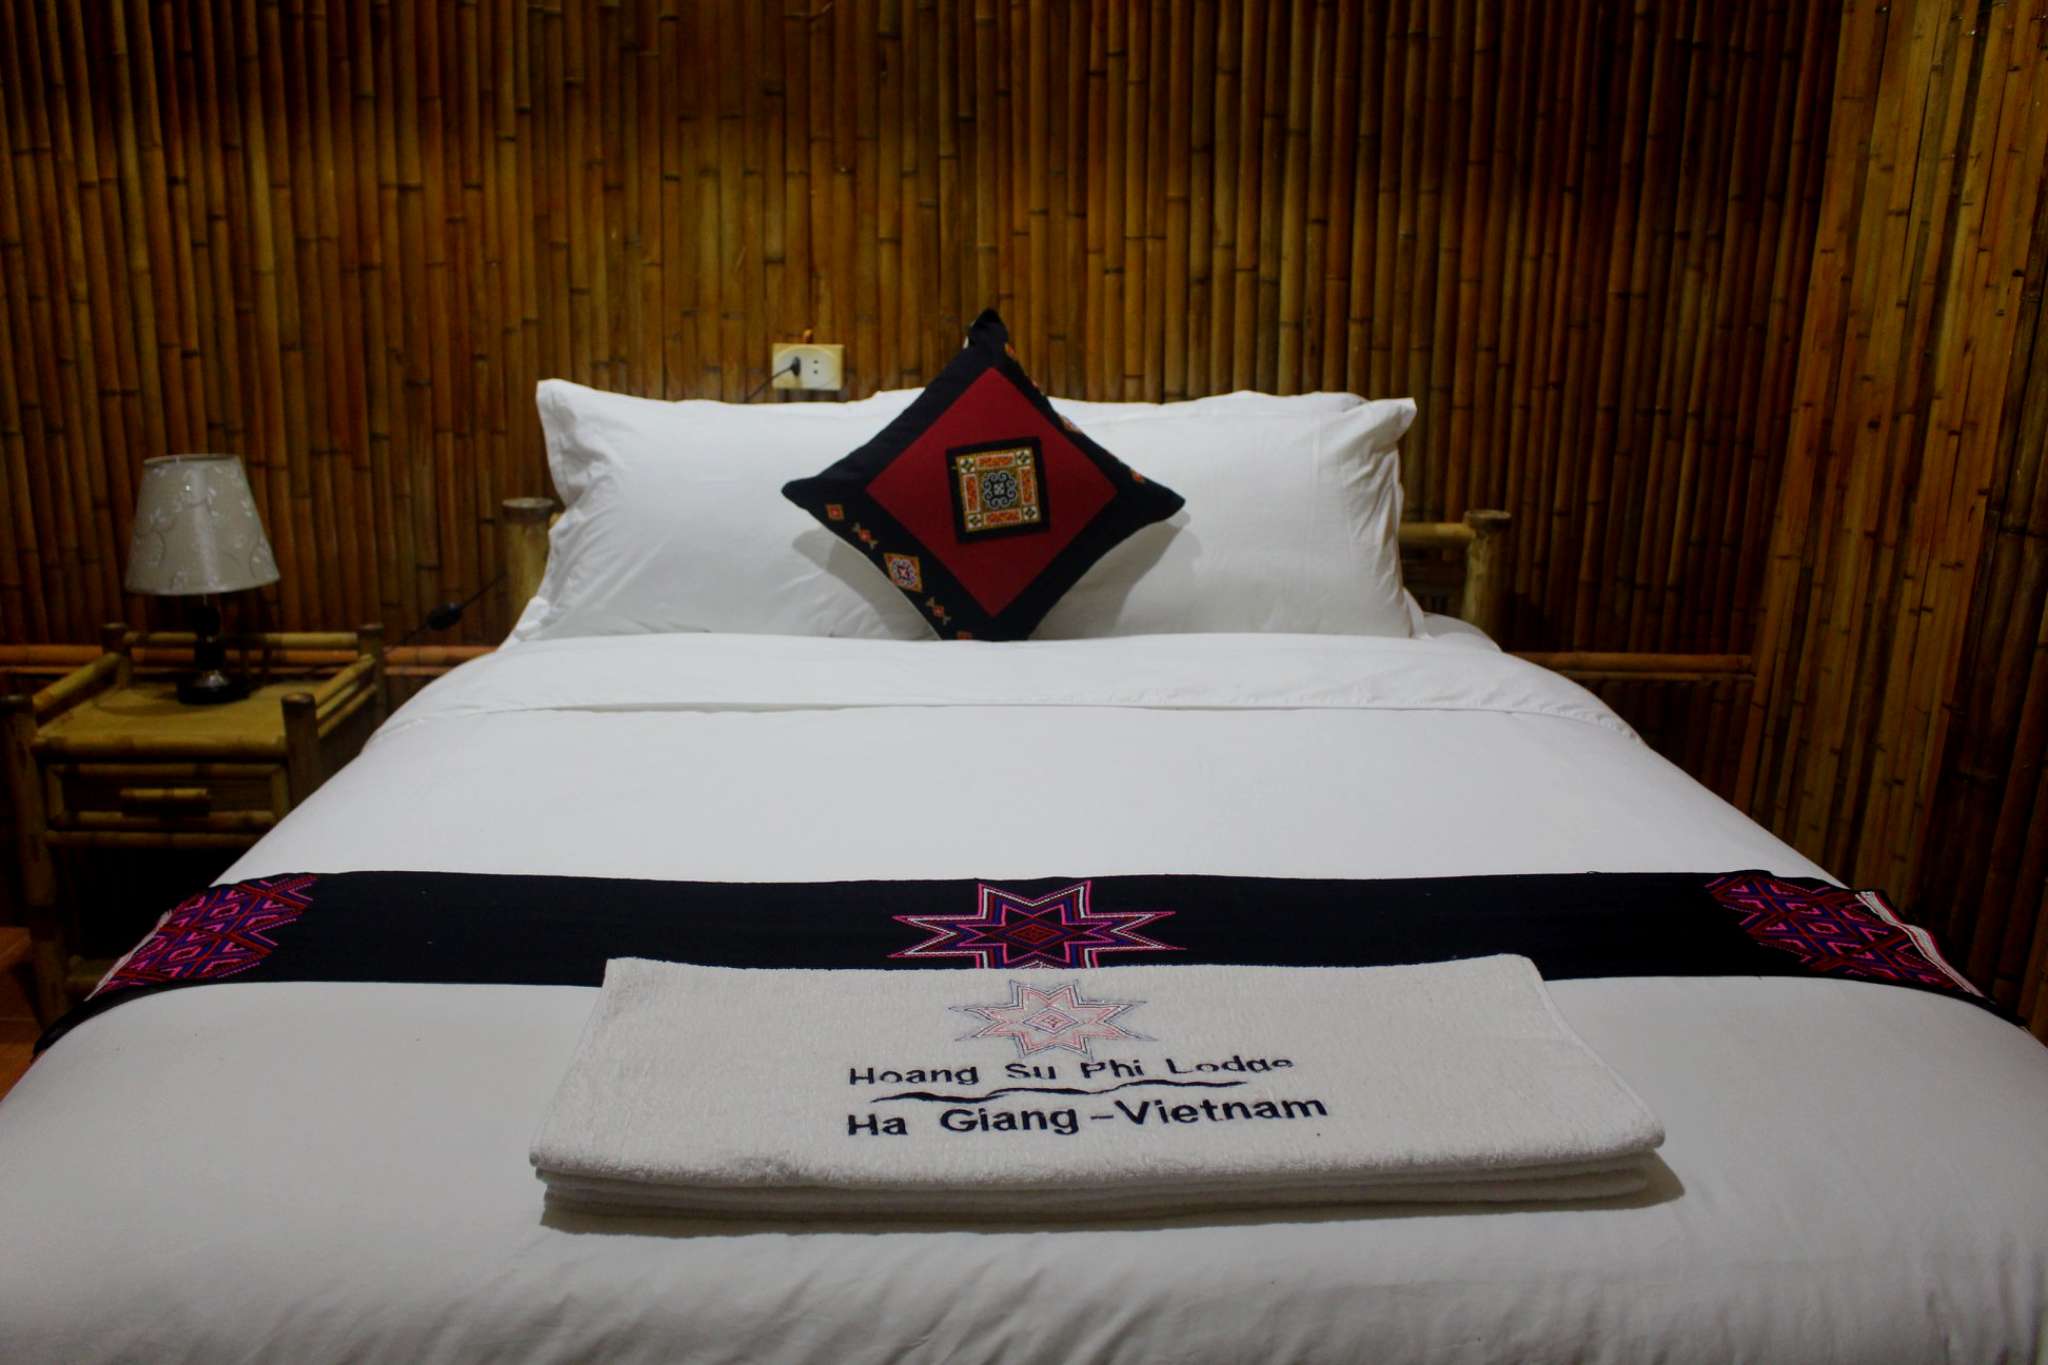 Double Room tại Hoàng Su Phì Lodge